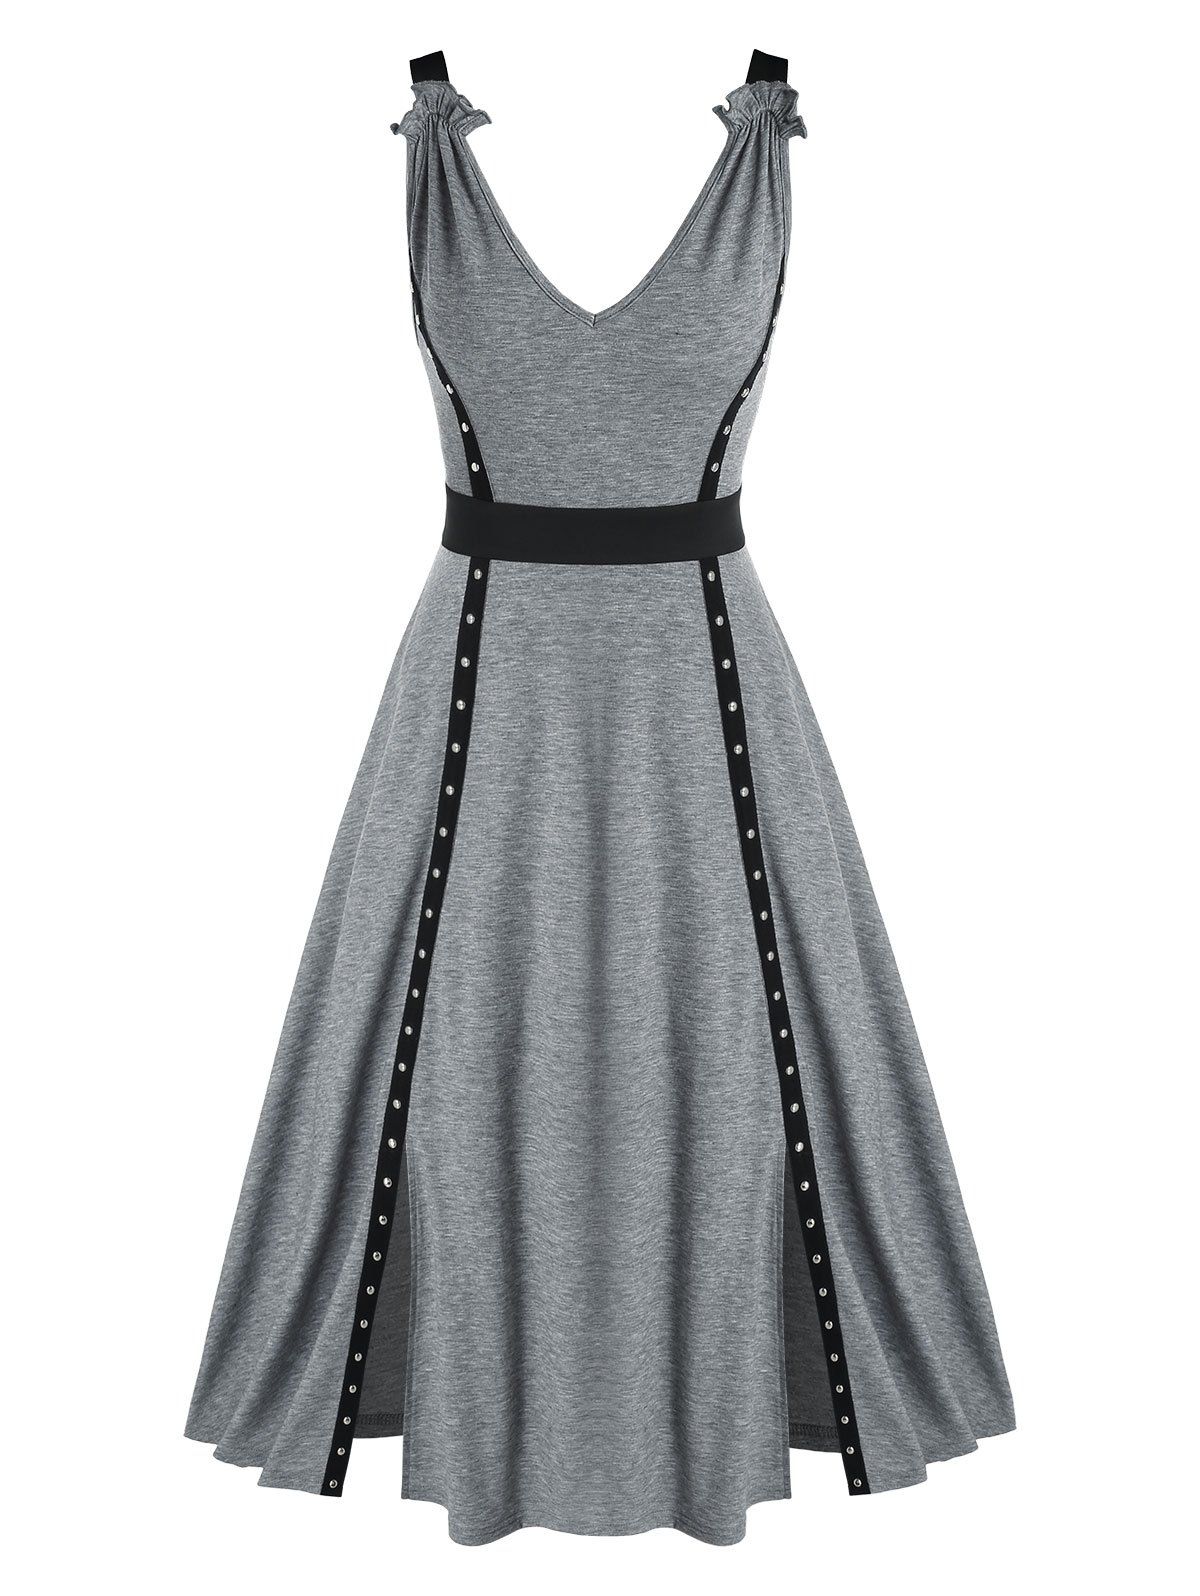 Summer A Line Midi Slit Dress Colorblock Rivets Sleeveless V Neck Dress - GRAY M